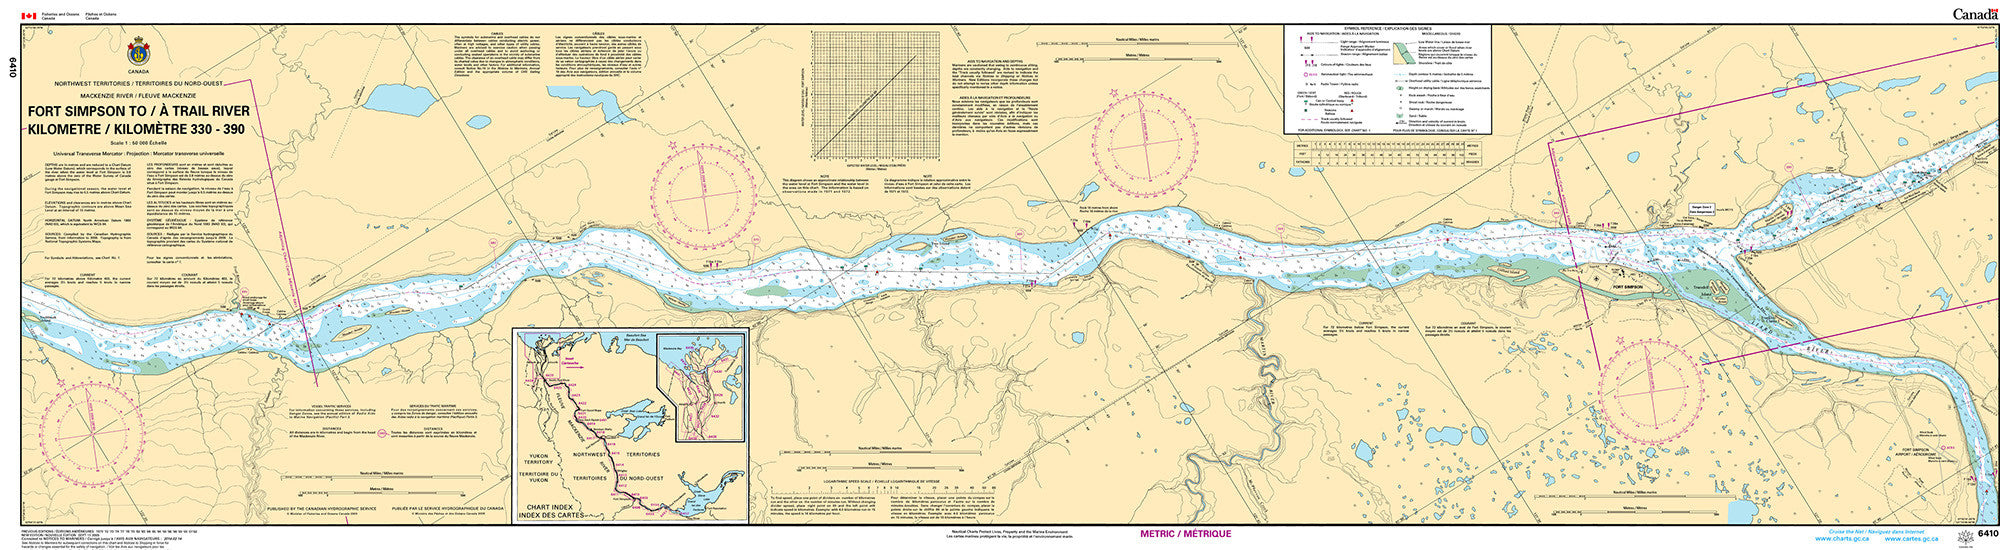 Canadian Hydrographic Service Nautical Chart CHS6410: Fort Simpson to/à Trail River Kilometre 330 / Kilometre 390